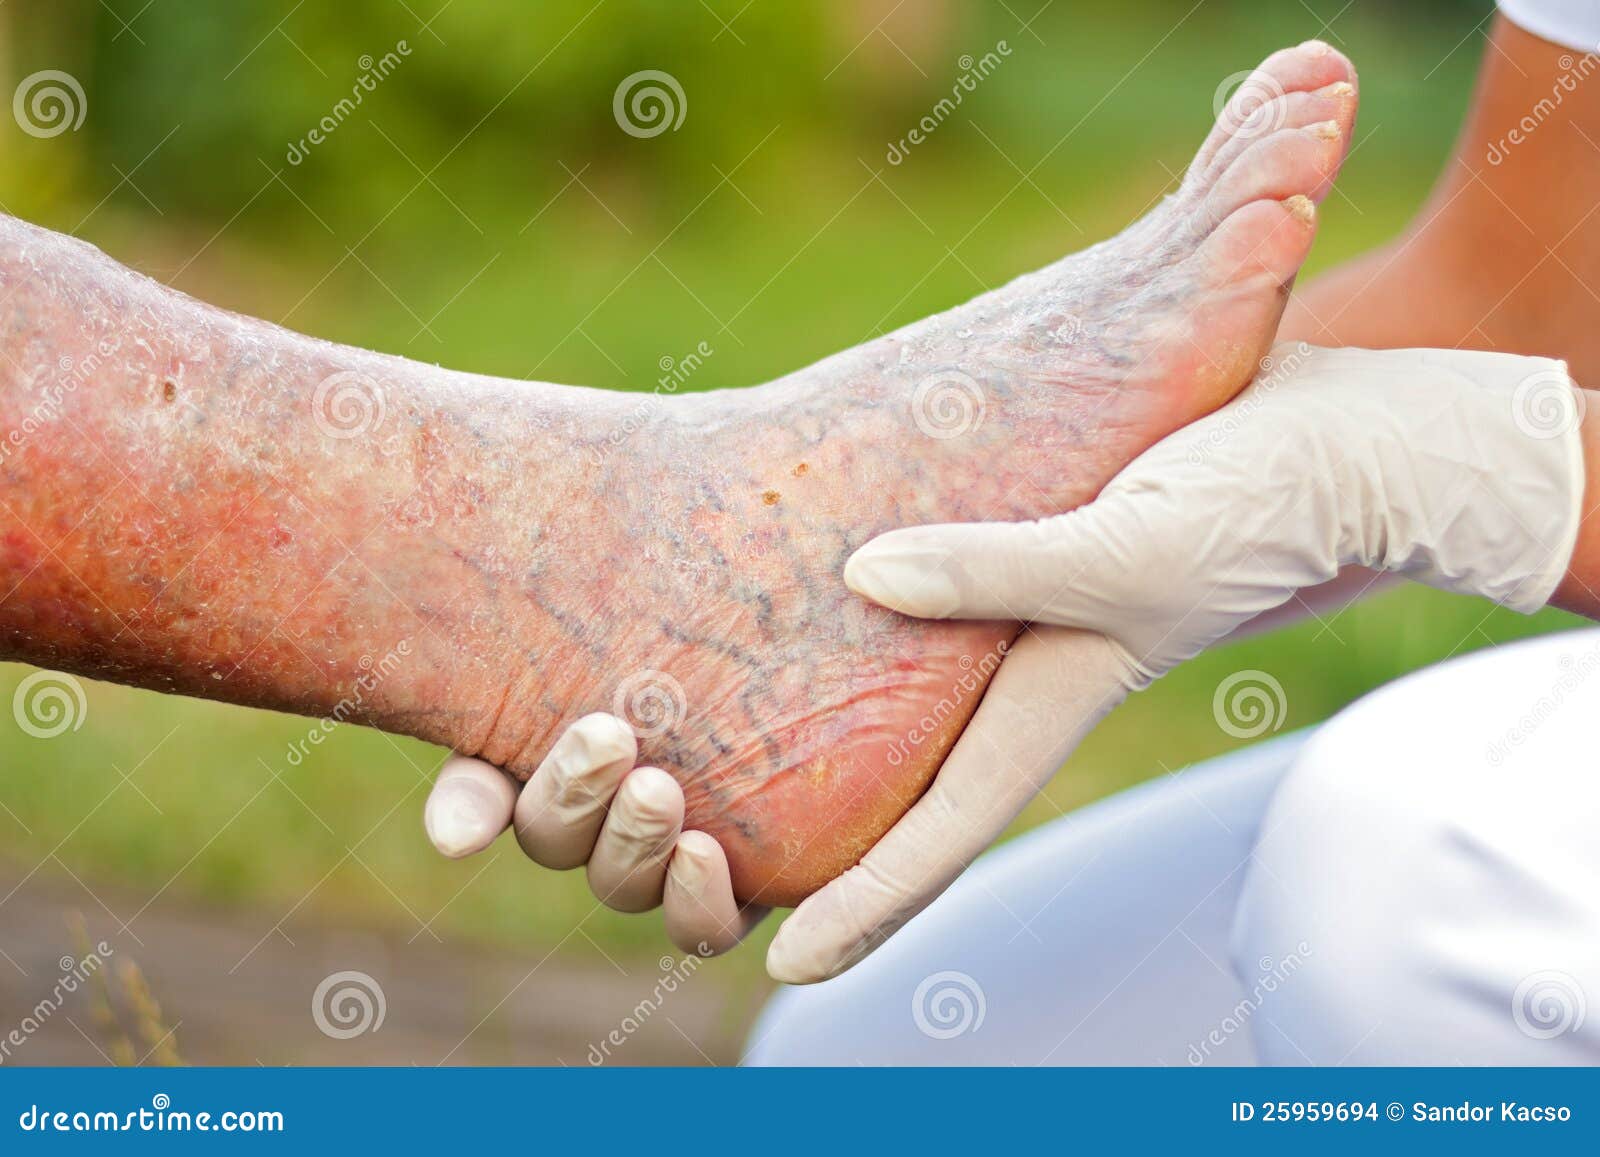 Sick elderly leg stock photo. Image of lifestyle, patient - 25959694